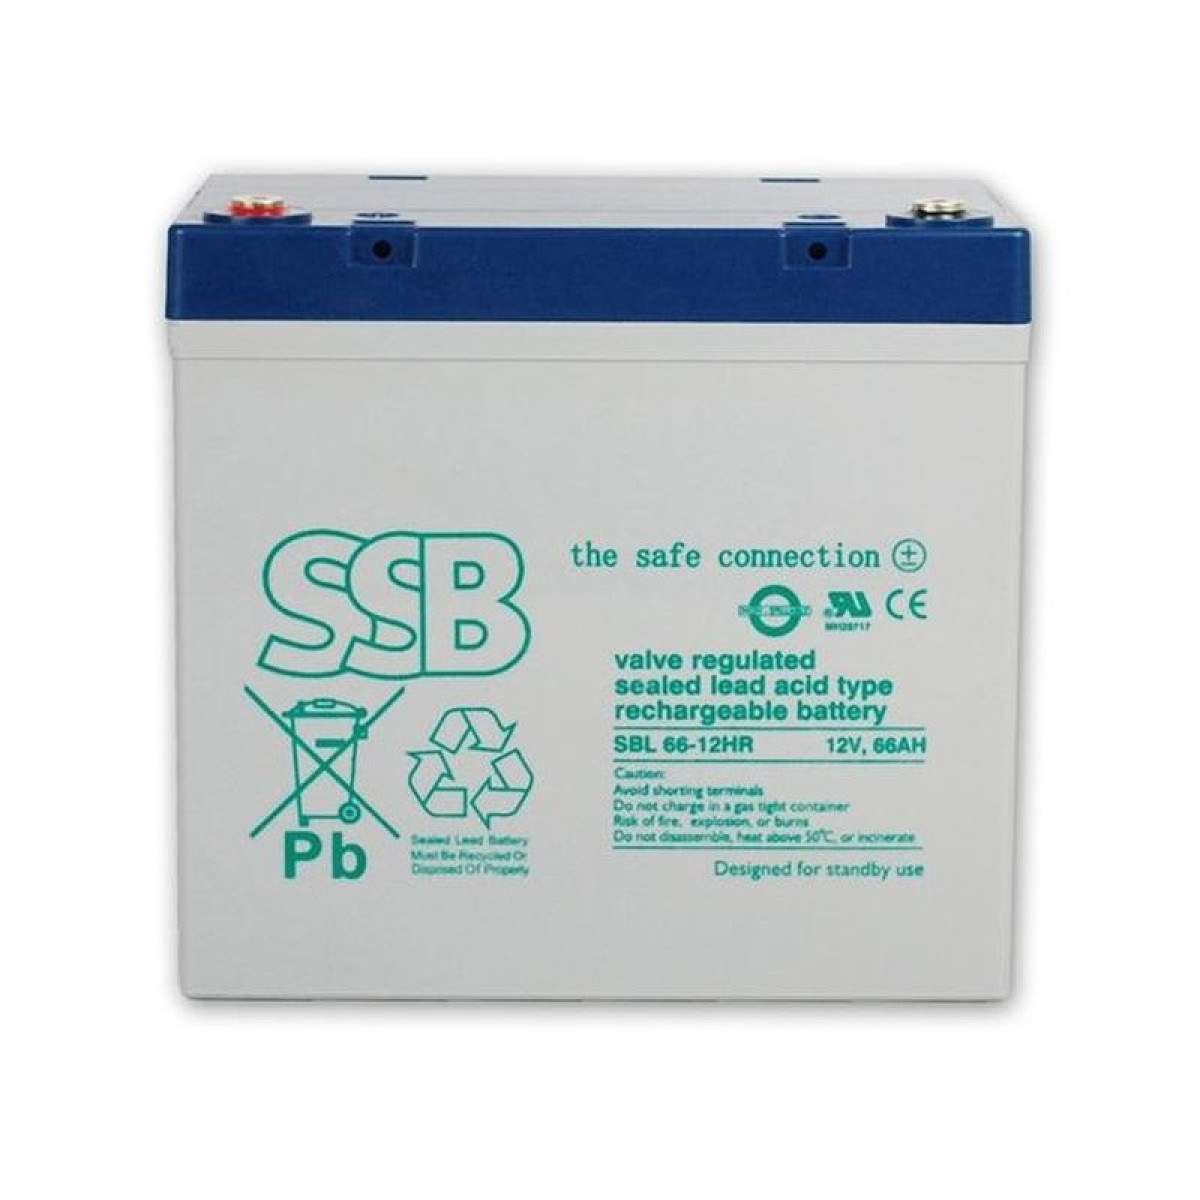 AGM свинцово-кислотный аккумулятор SSB SBL 66-12HR (12V 55.4Ah) 256_256.jpg